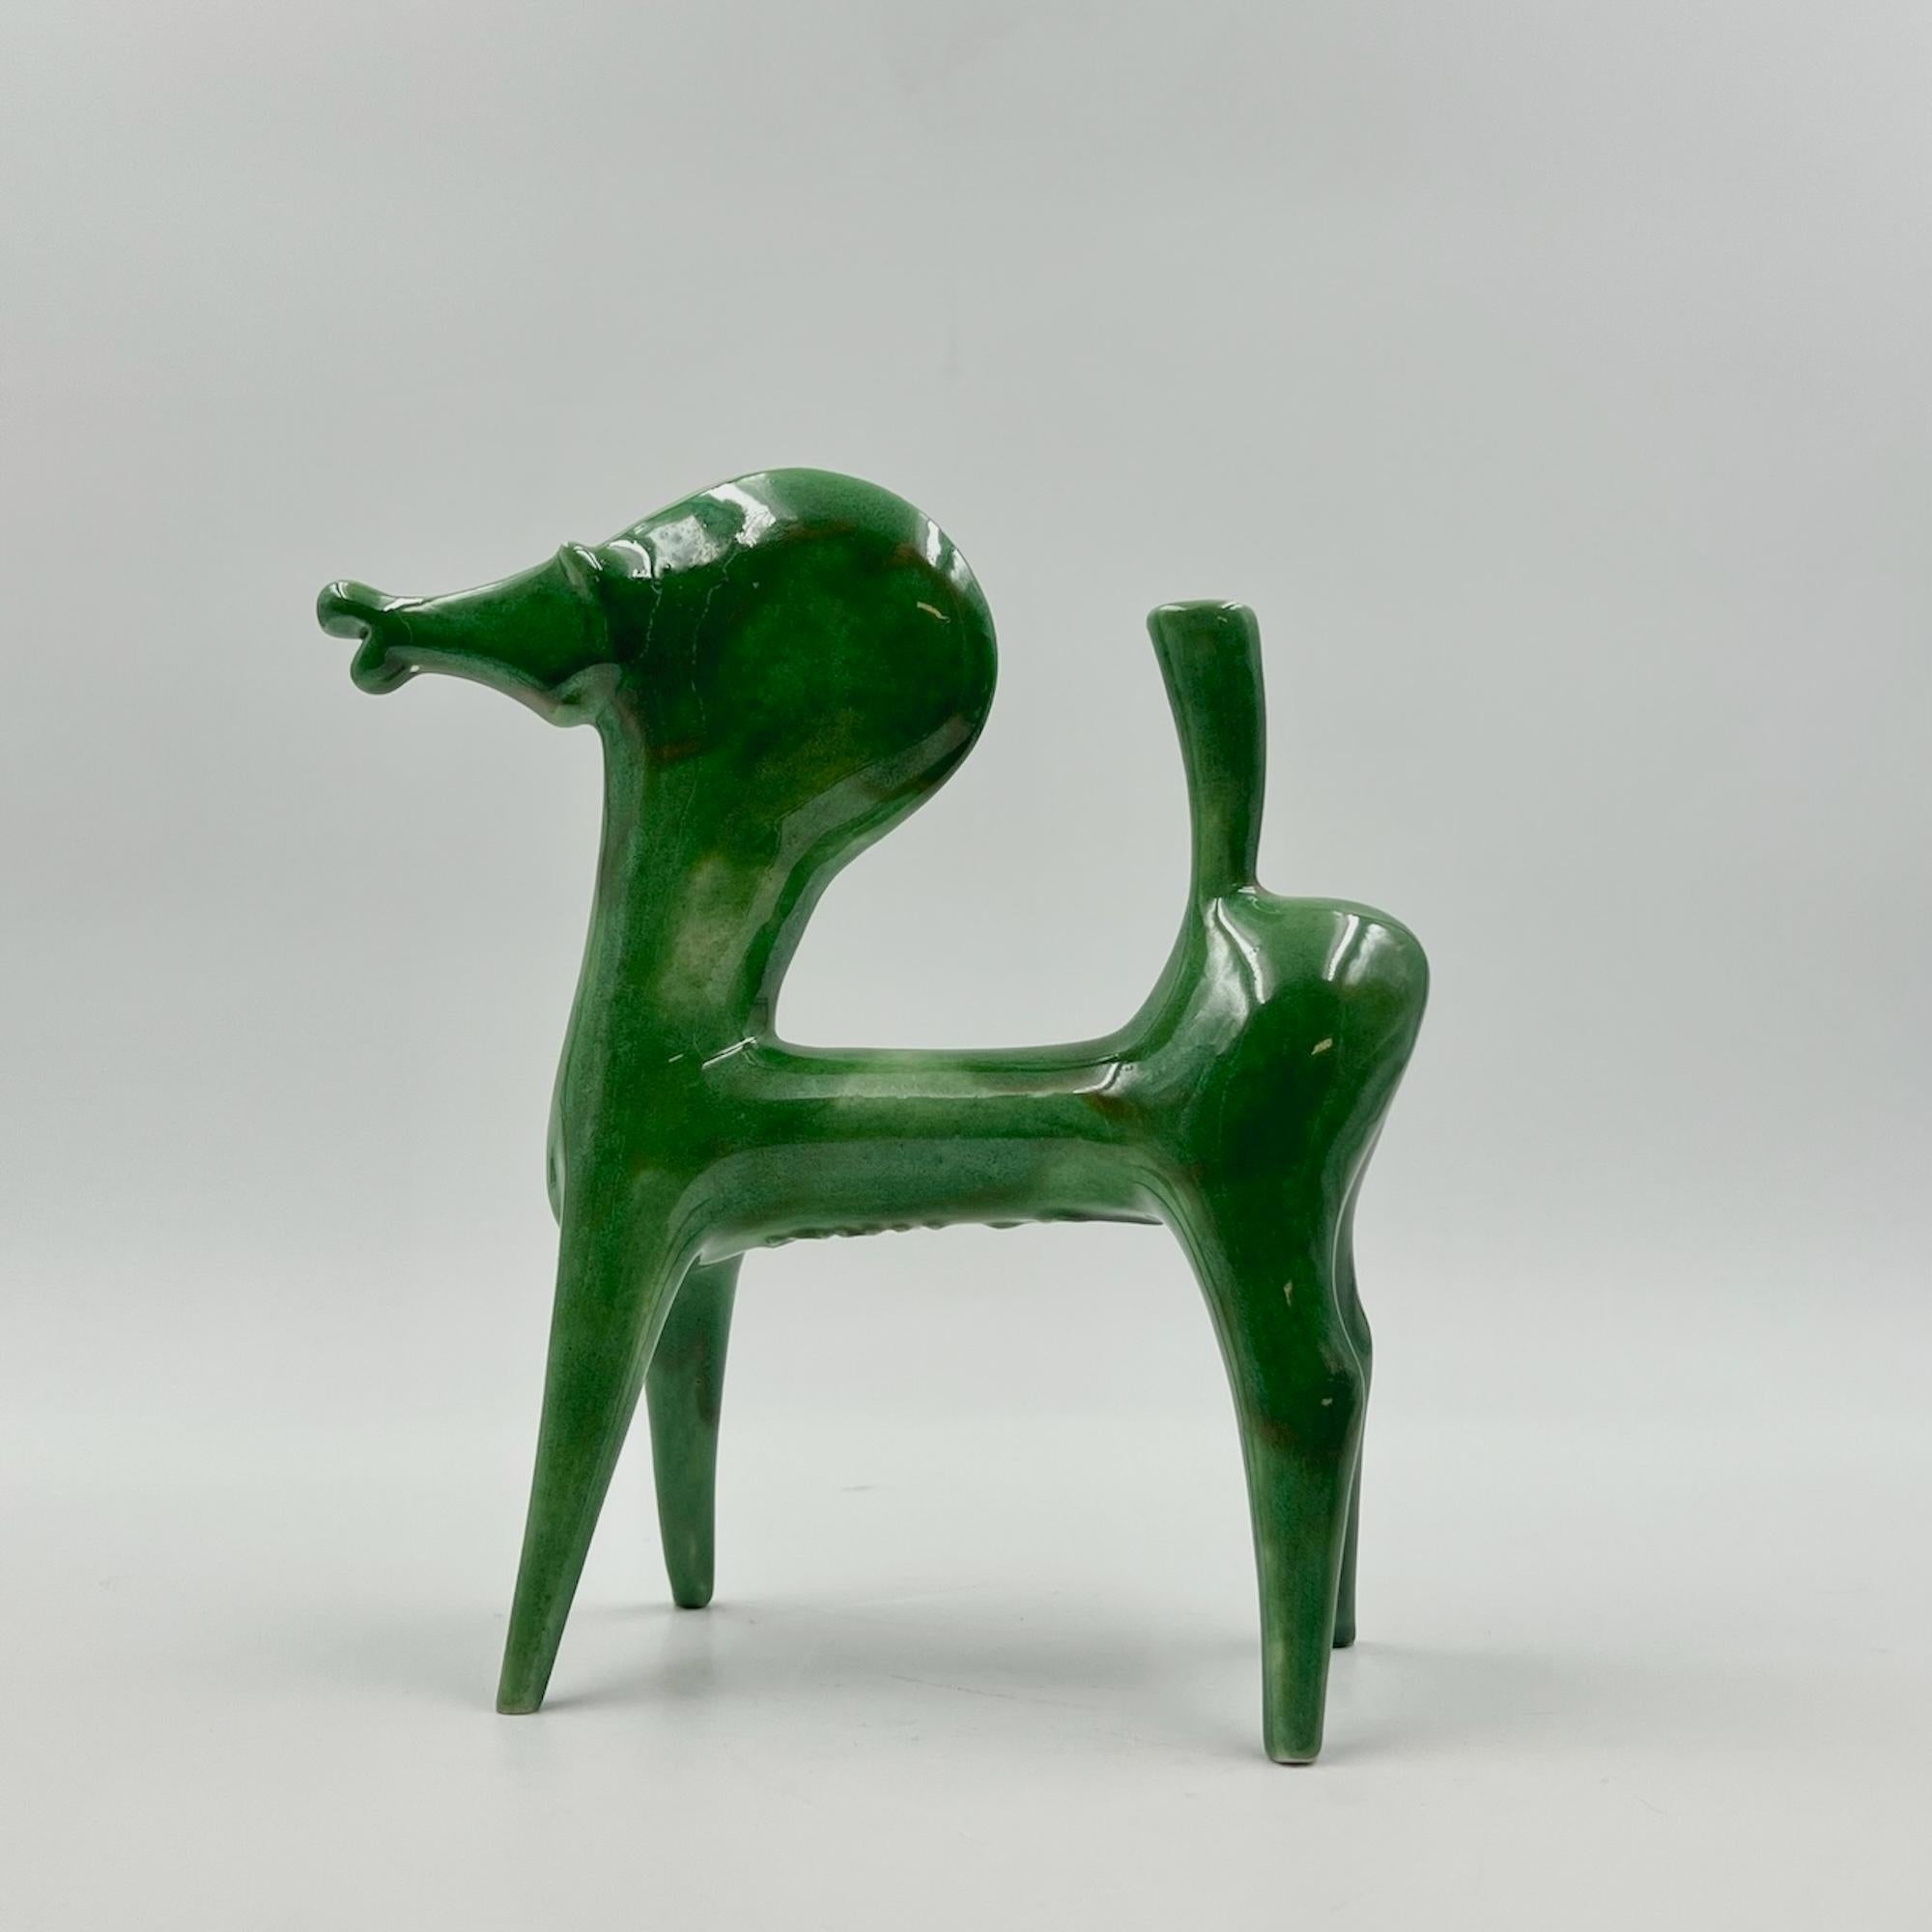 Italian Green Ceramic Horse Figurine - 1970s Handmade Sculpture by Roberto Rigon Italy  For Sale